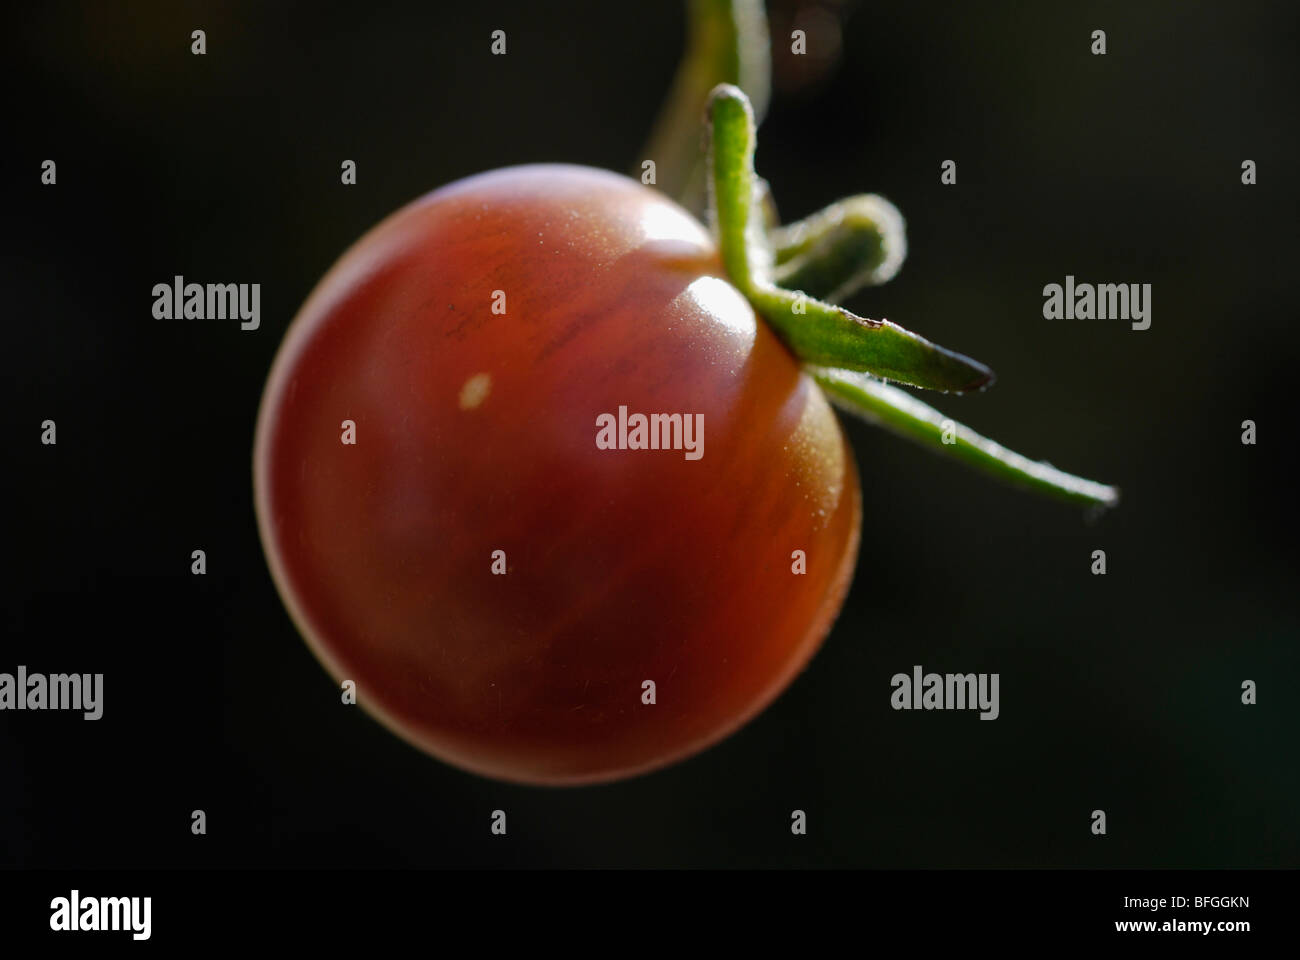 Russian Black cherry tomato Stock Photo